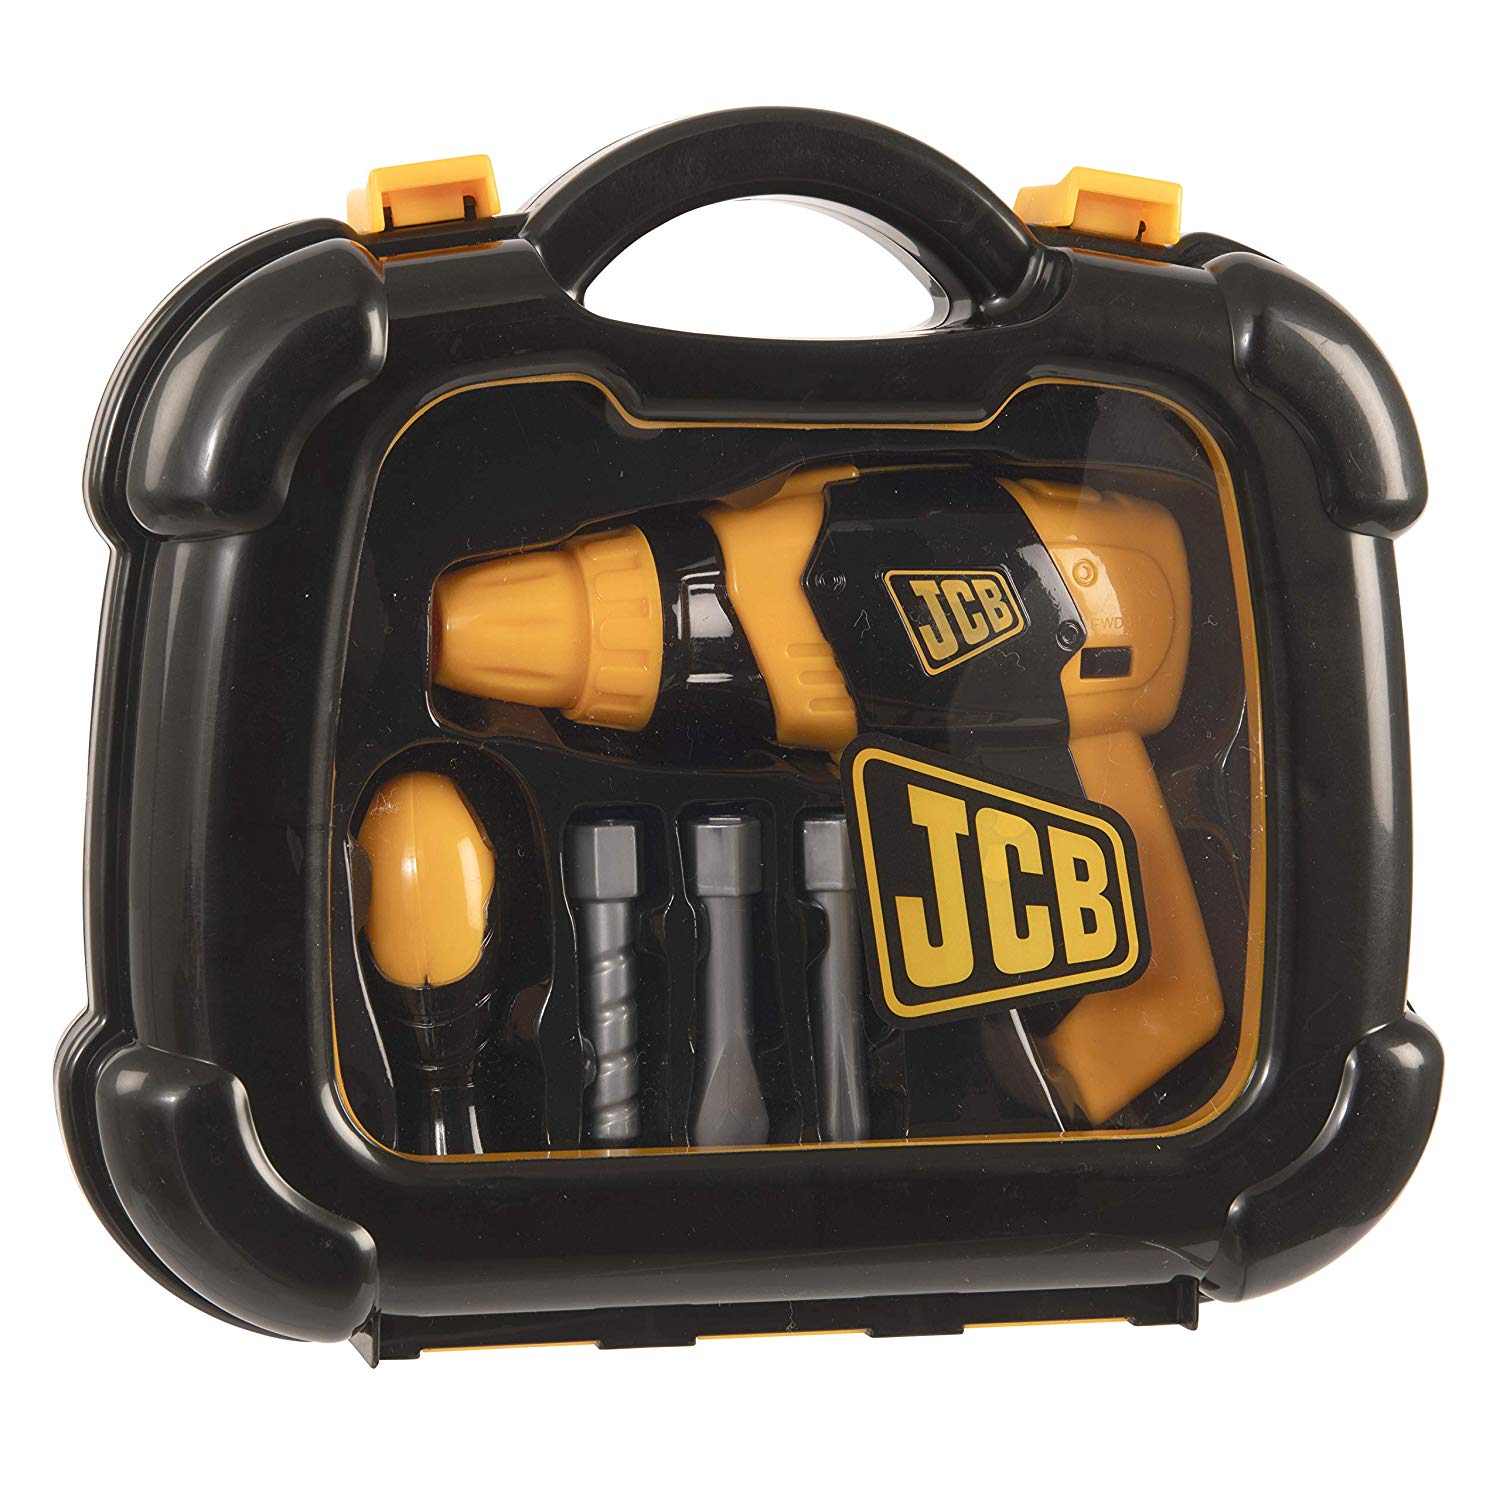 HTI JCB Tool Case & Tools